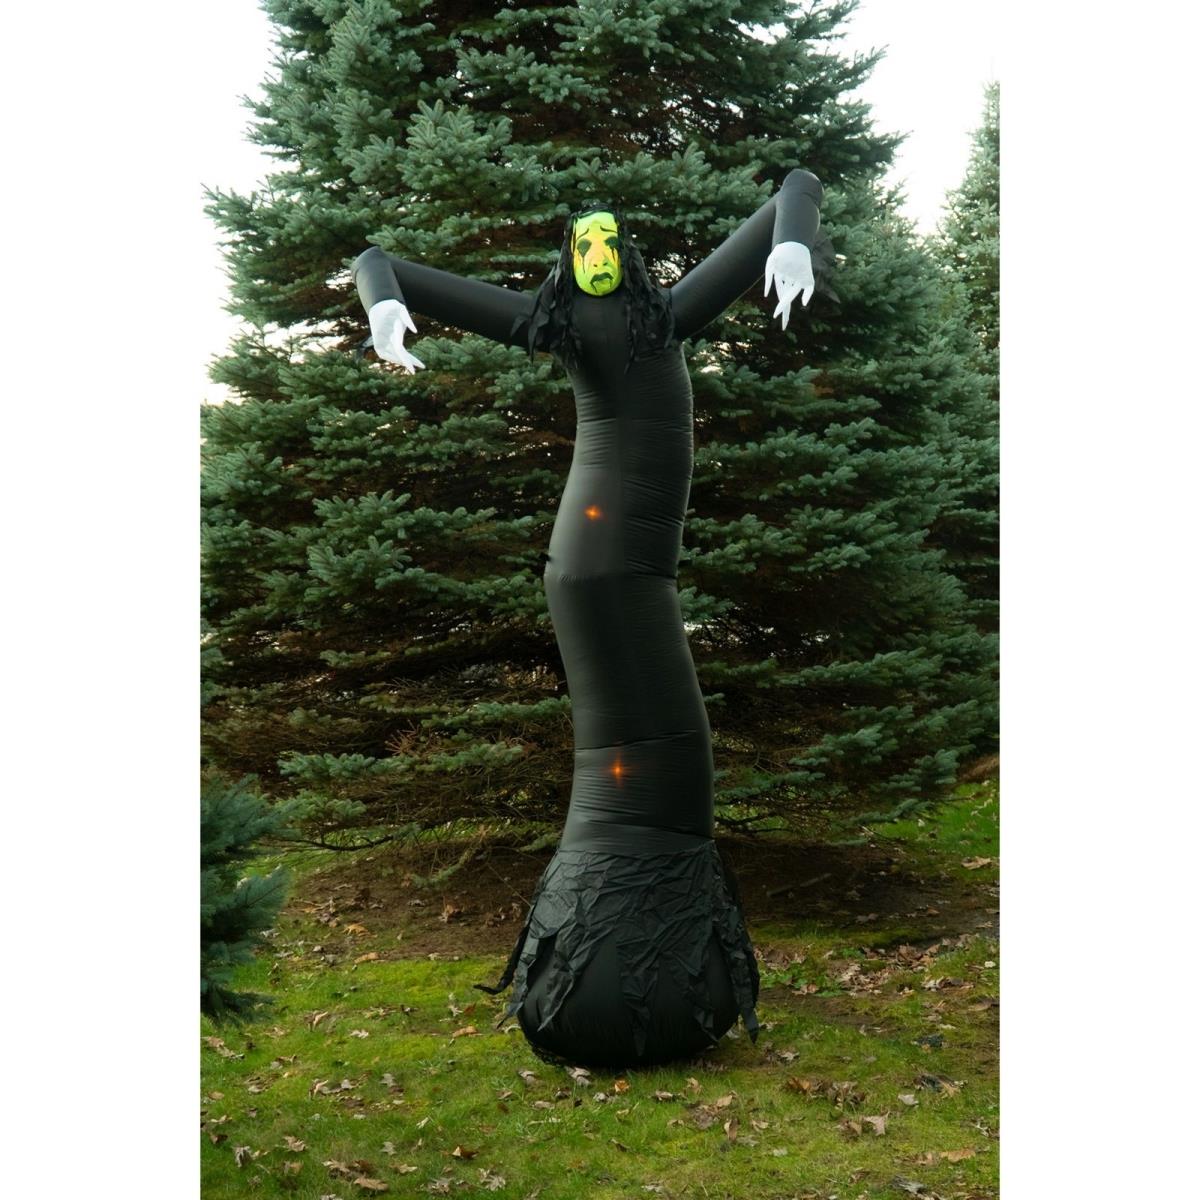 413617 Giant Inflatable Phantom Lawn Decor - One Size